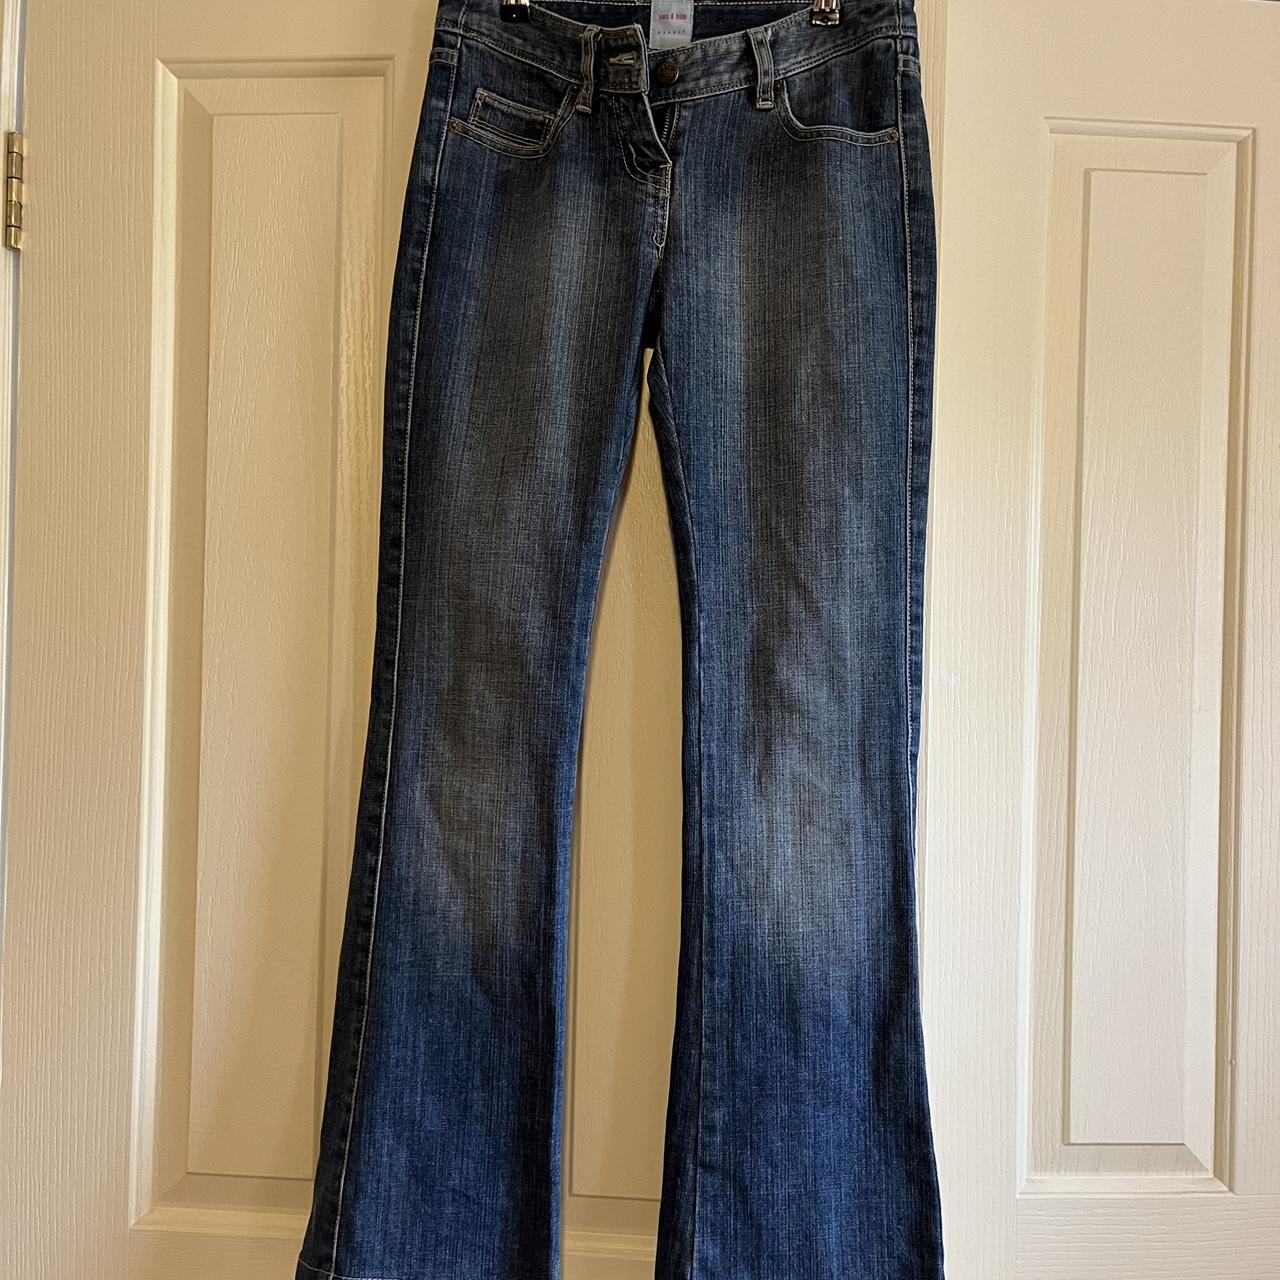 Sass & Bide jeans size 6 Super flattering - Depop